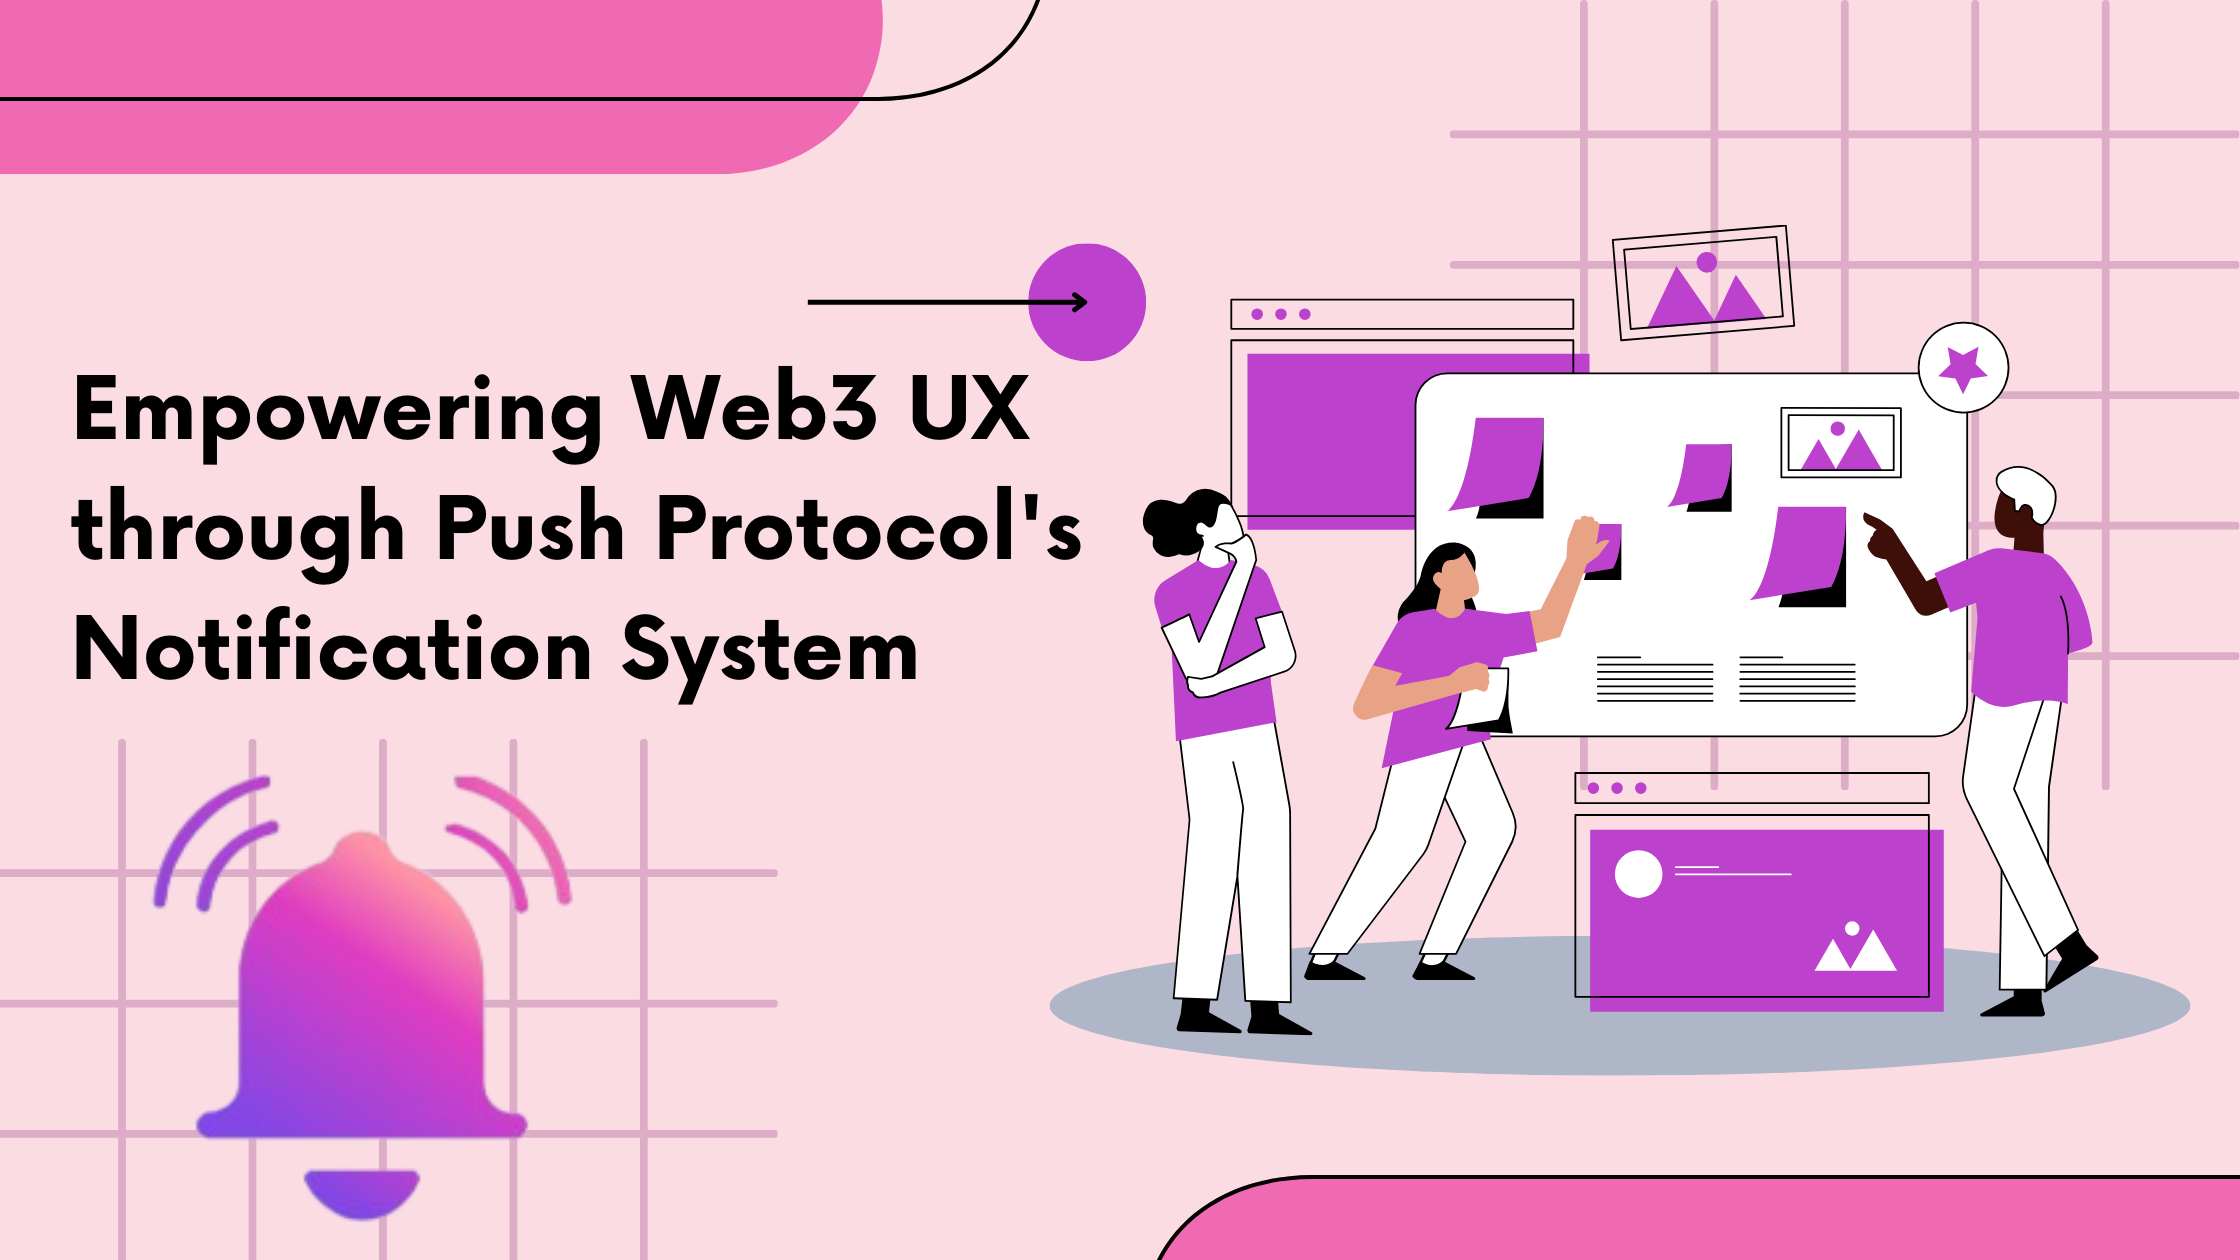 Empowering Web3 UX through Push Protocol's Notification System